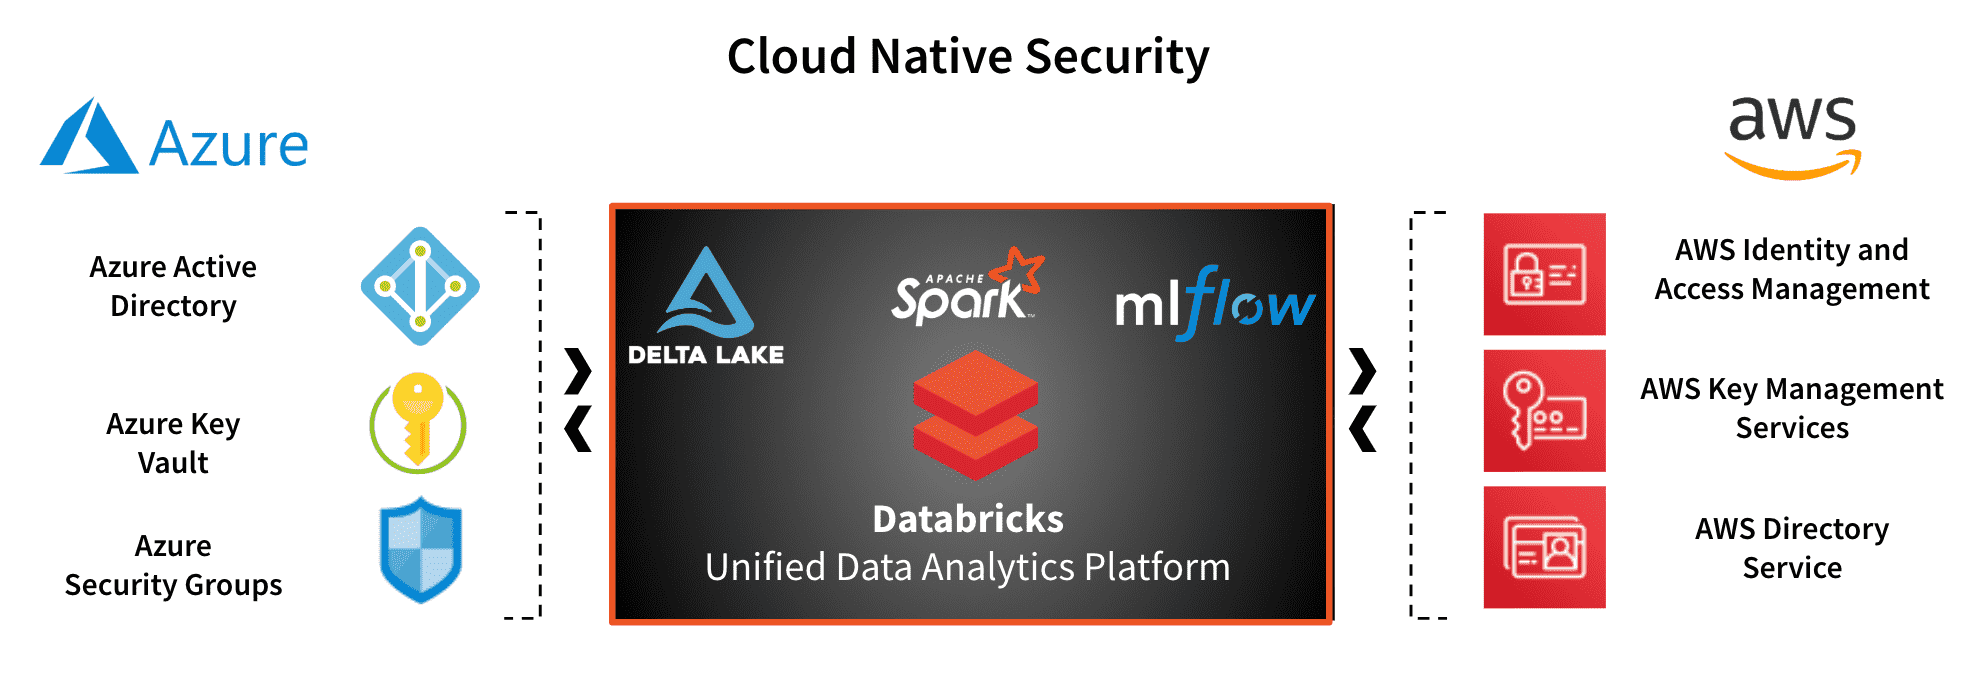 Cloud native security